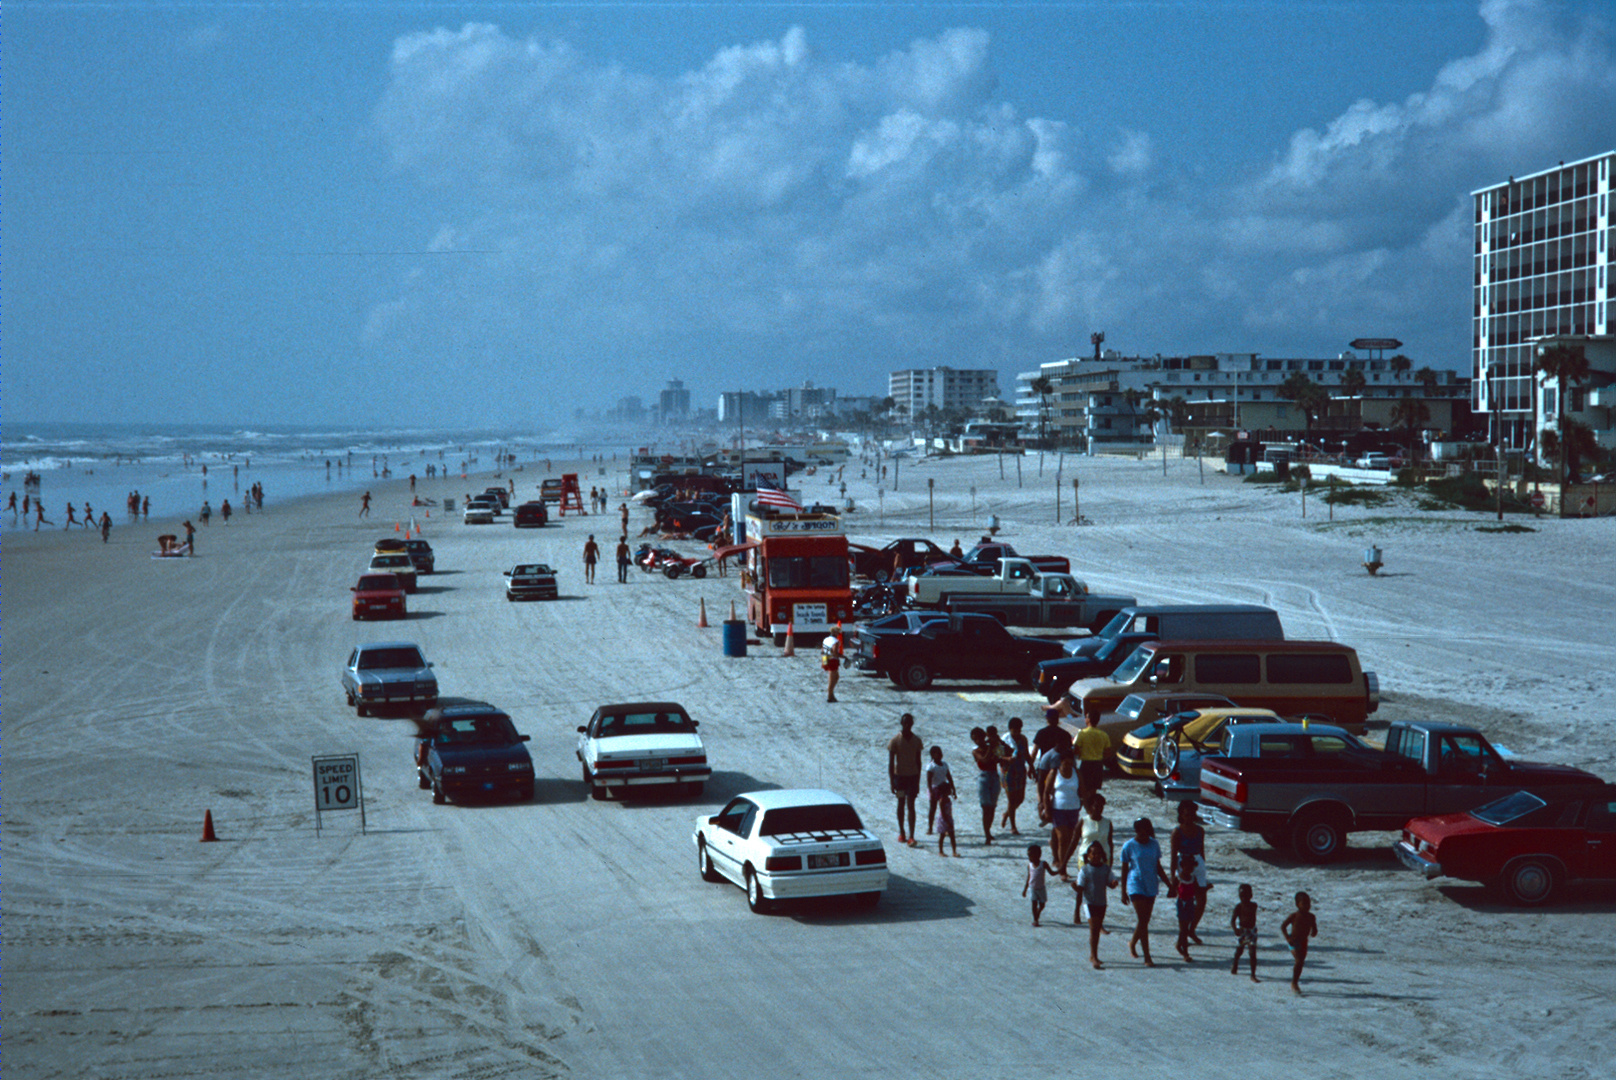 Daytona Beach, FL - 1989